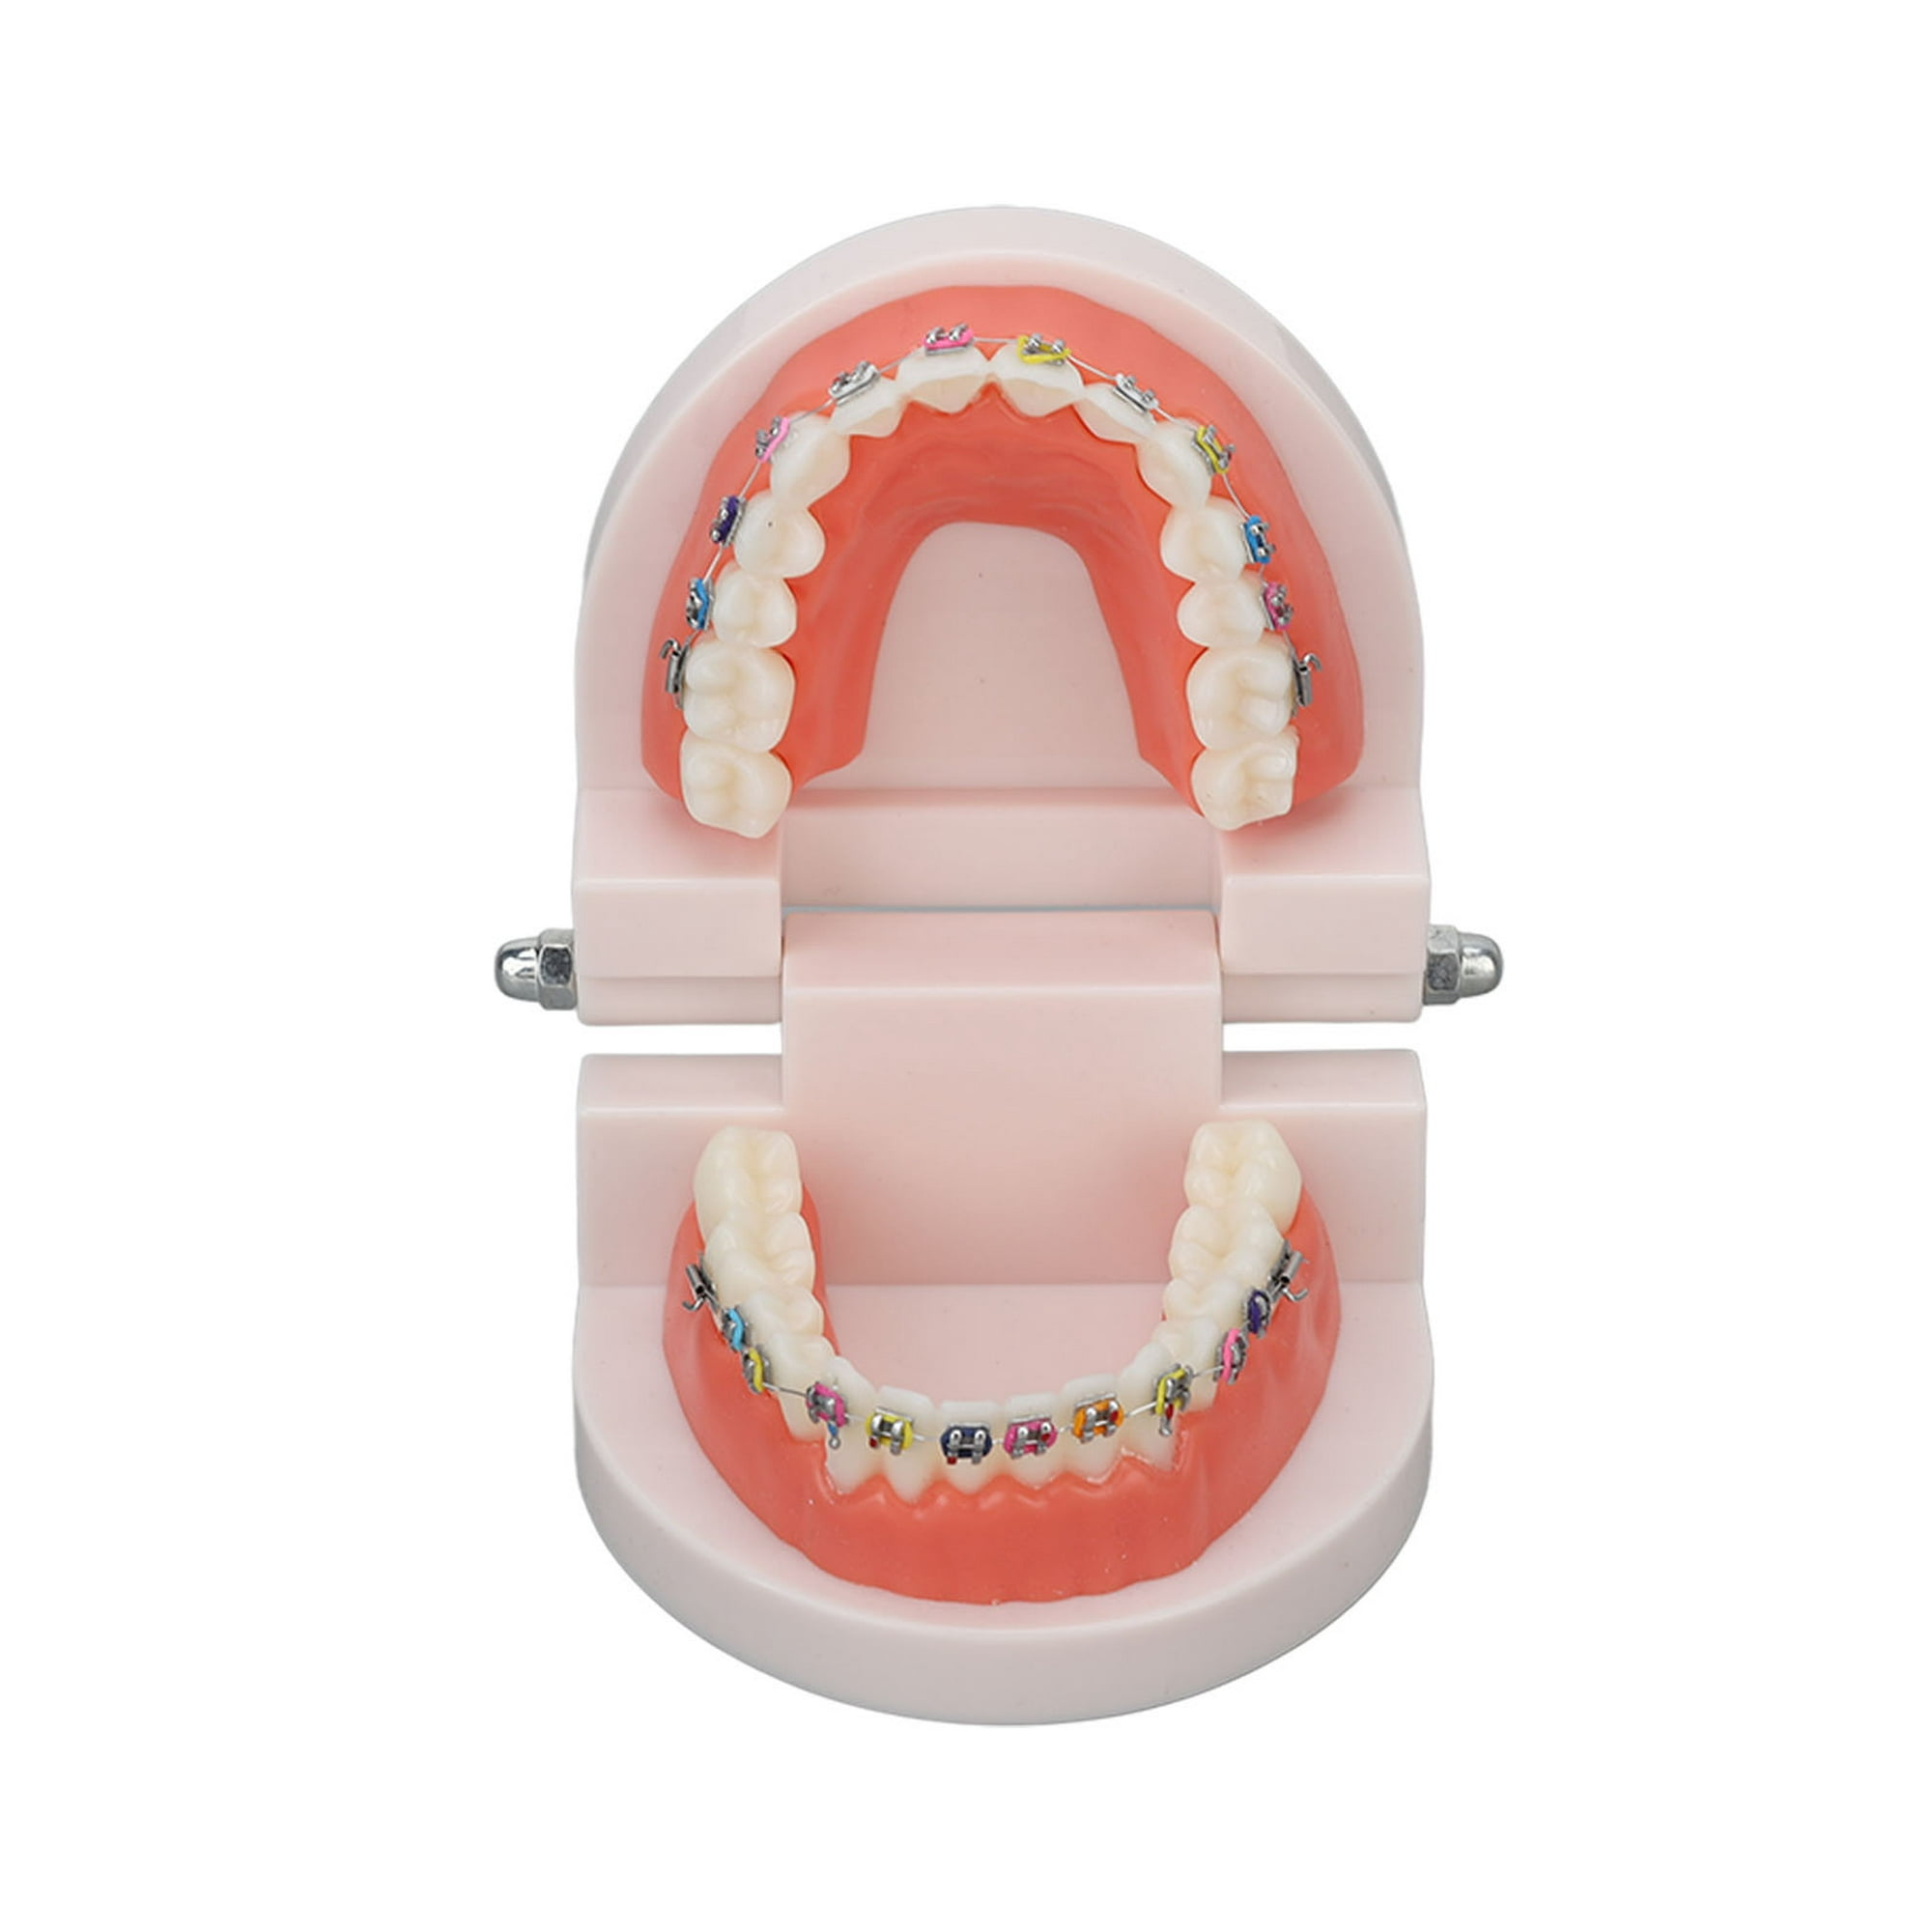 Aparatos dentales para niños - Belladent Bonanova Dental